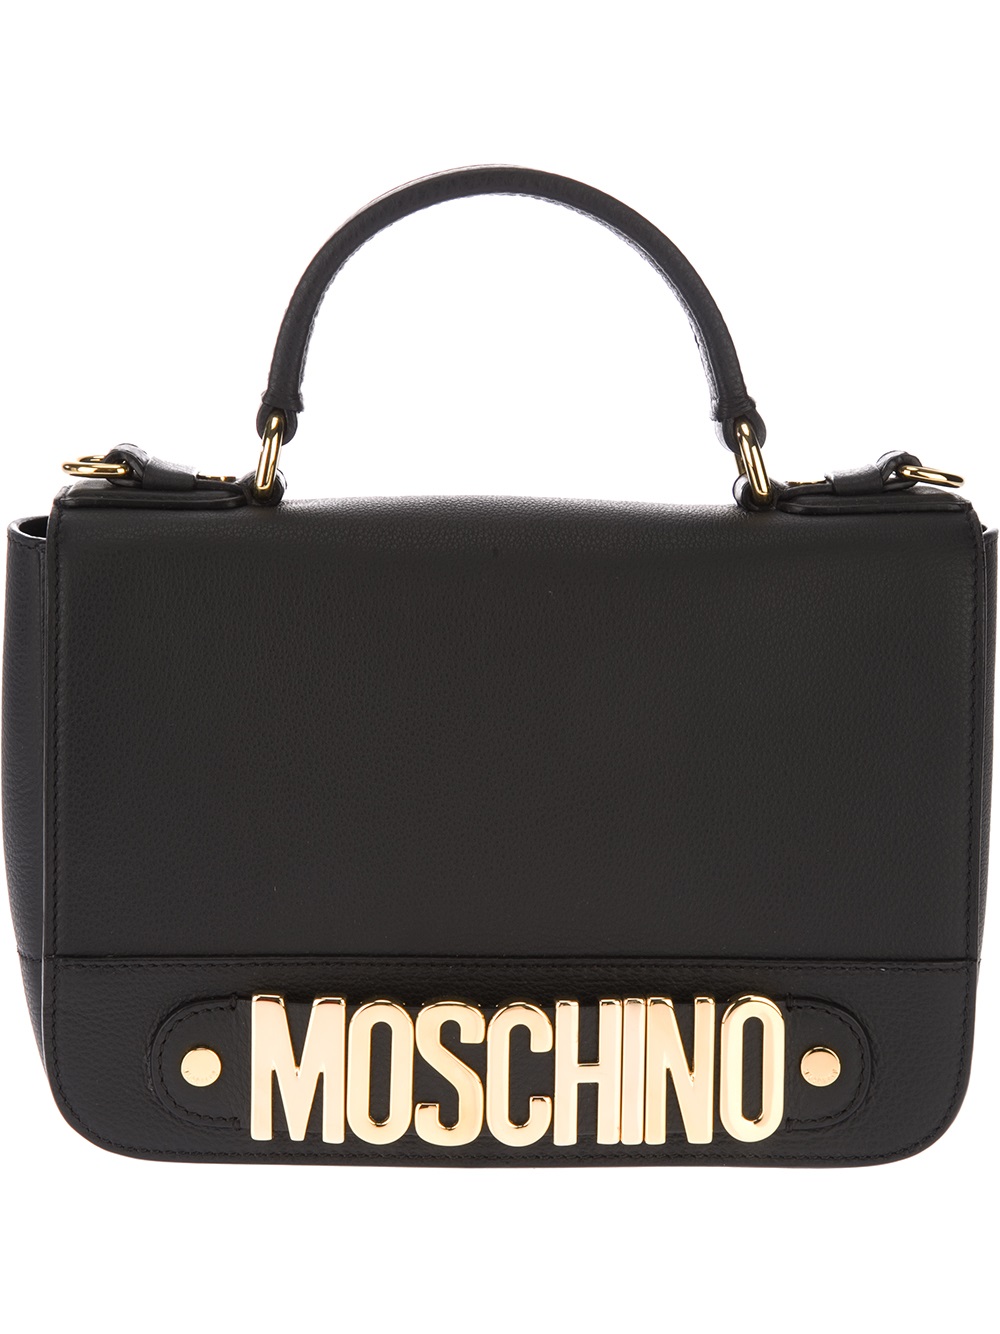 Lyst - Moschino Logo Bag in Black